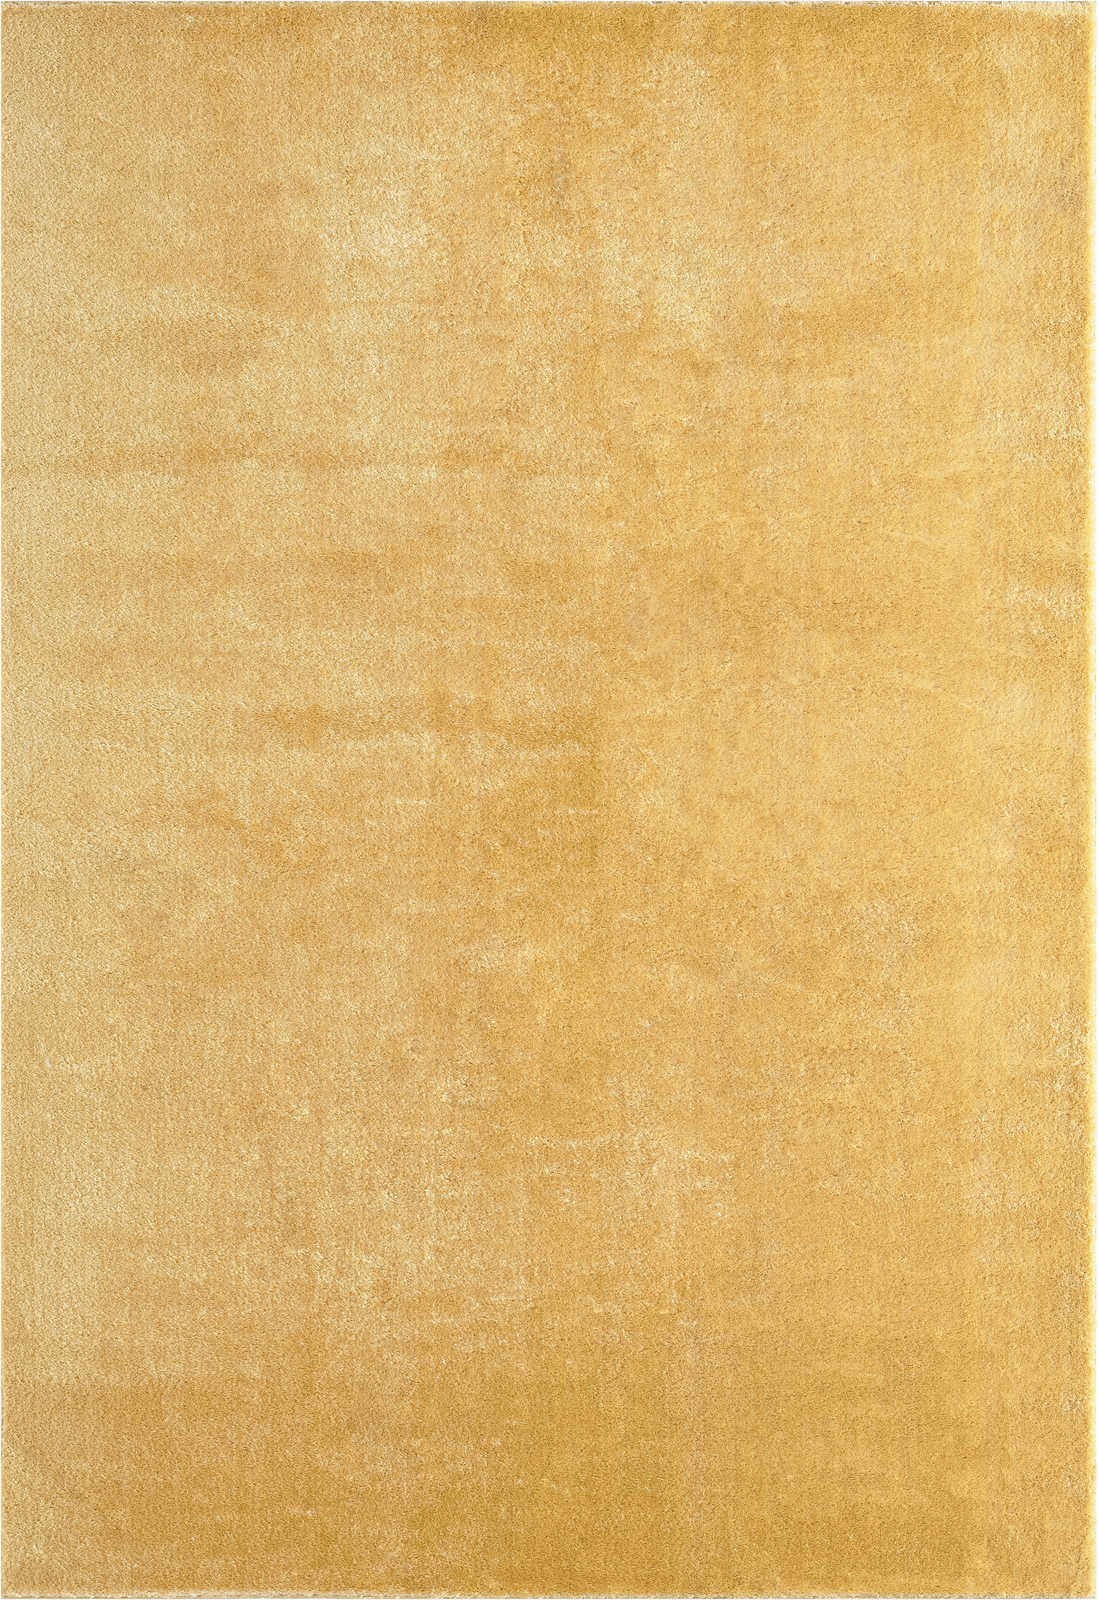             Cuddly soft high pile carpet in gold - 110 x 60 cm
        